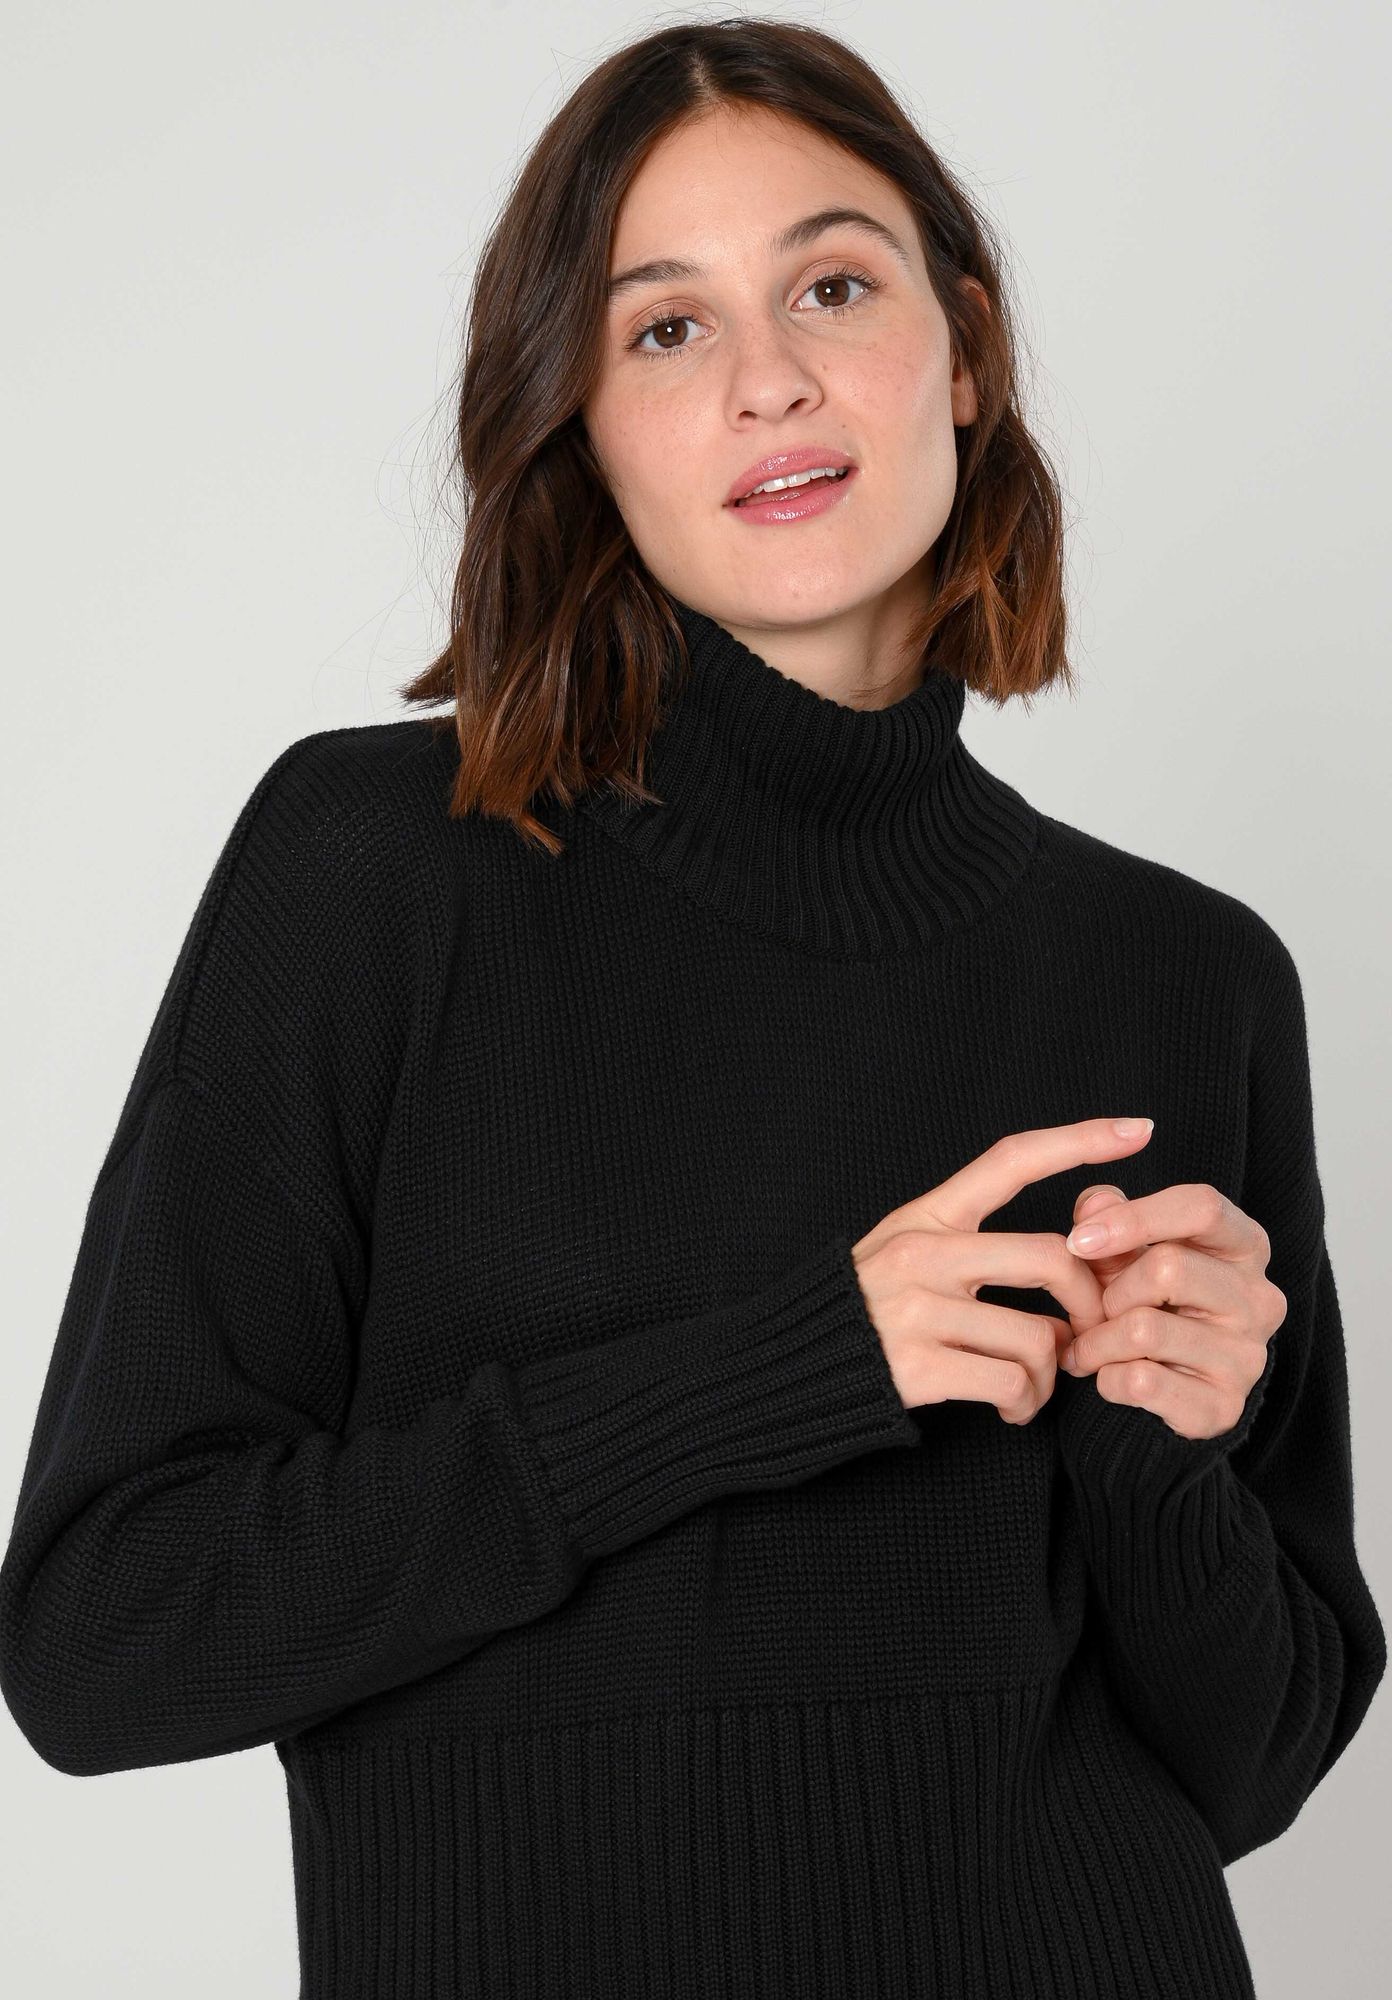 Turtleneck sweater in black made of organic cotton by ThokkThokk (S)